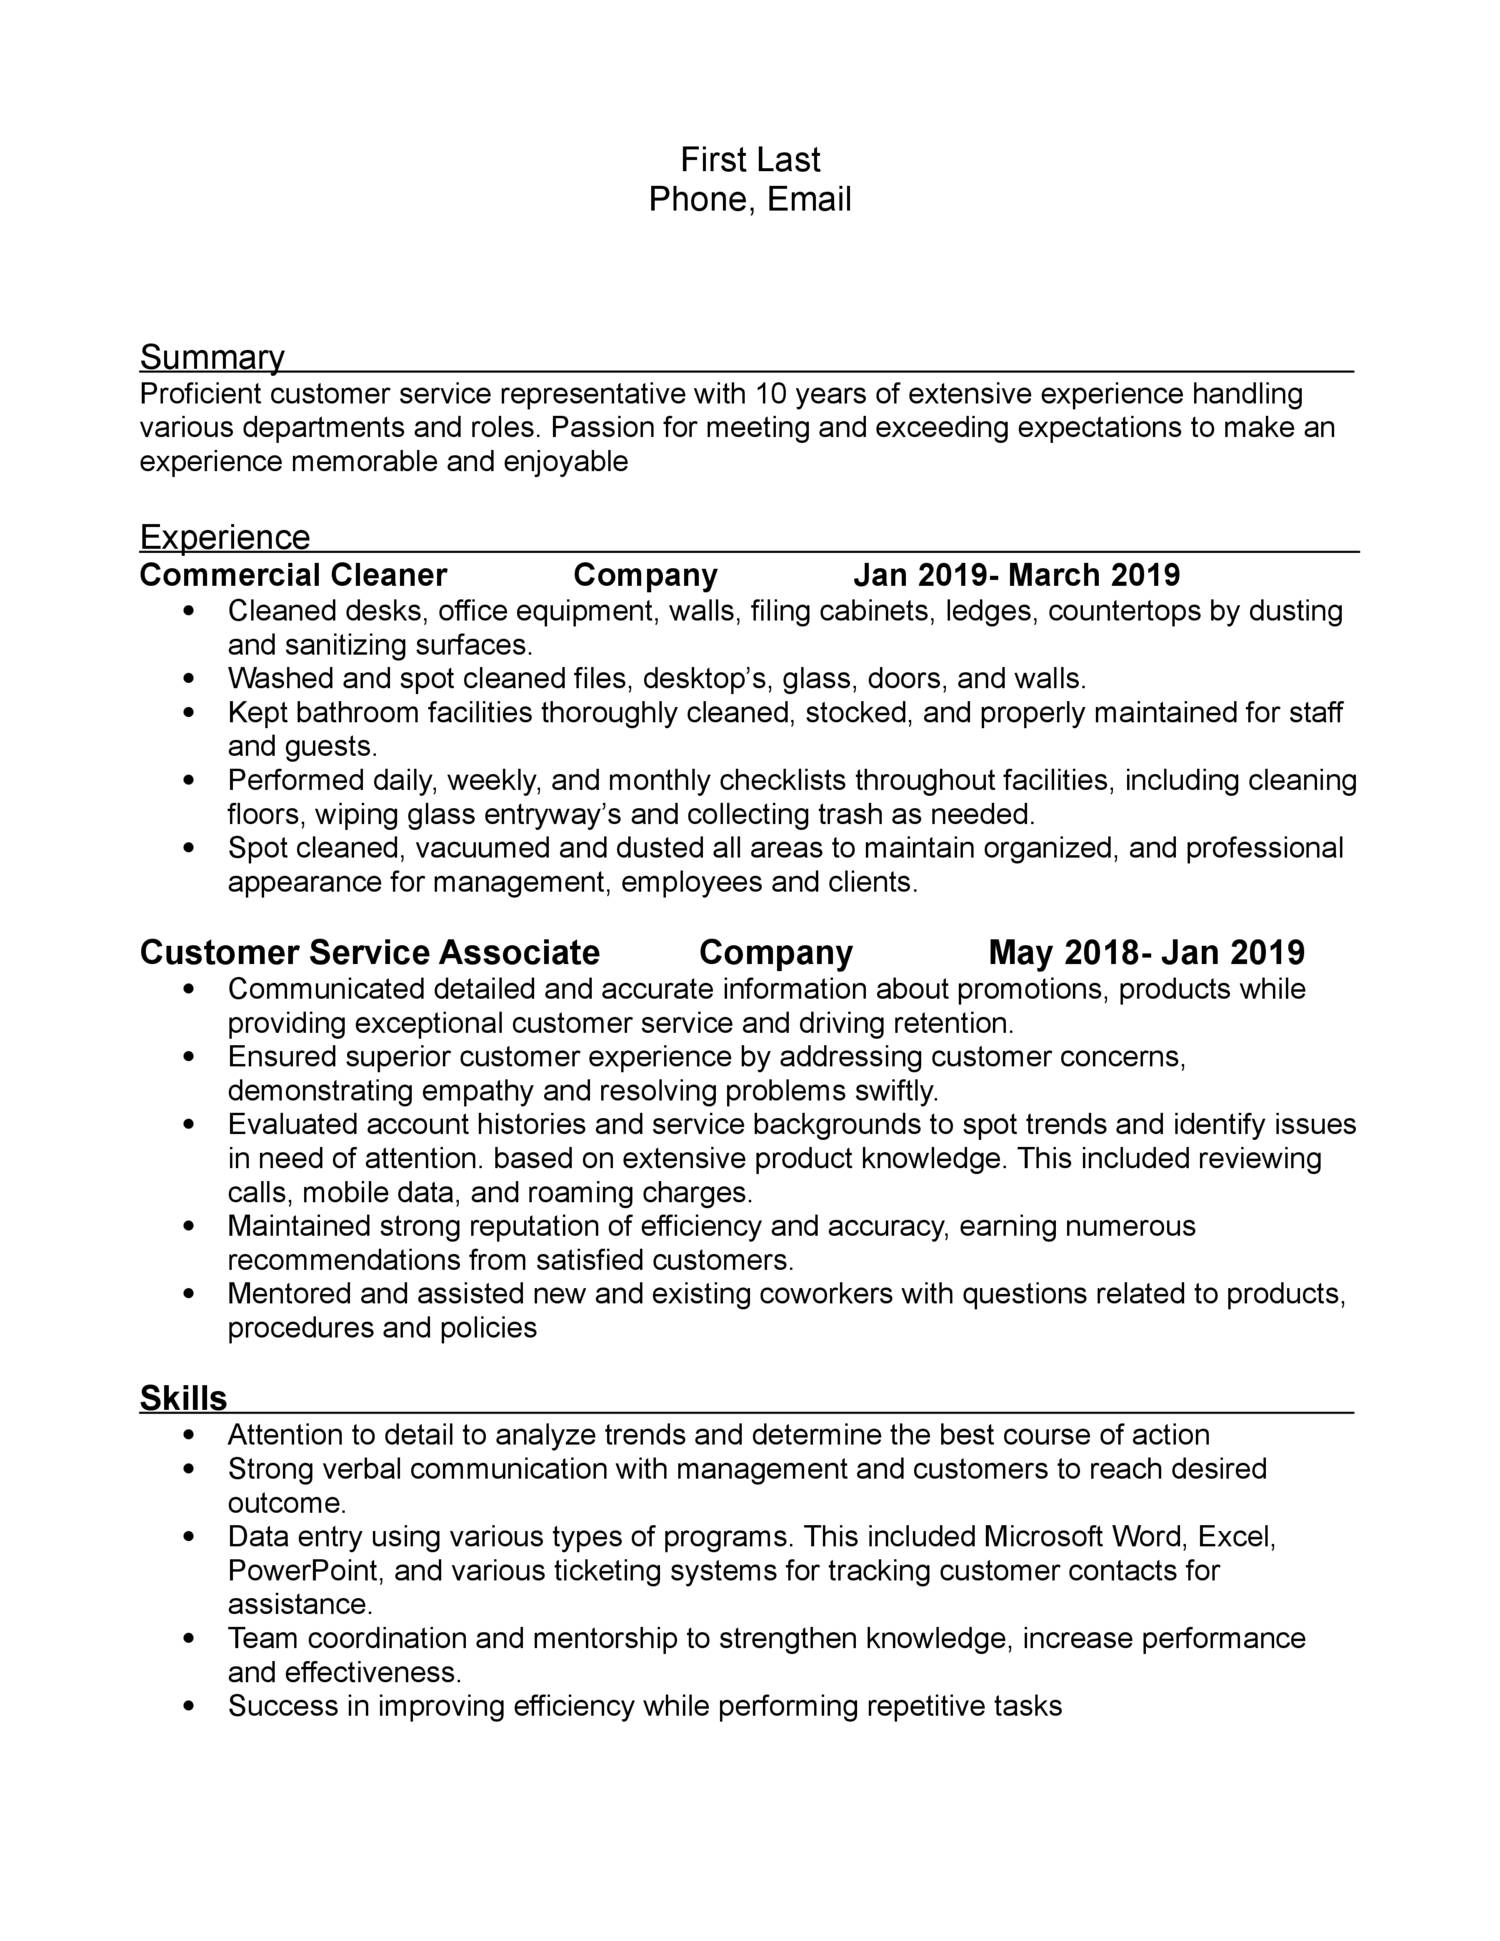 Updated resume 2019 (1).pdf